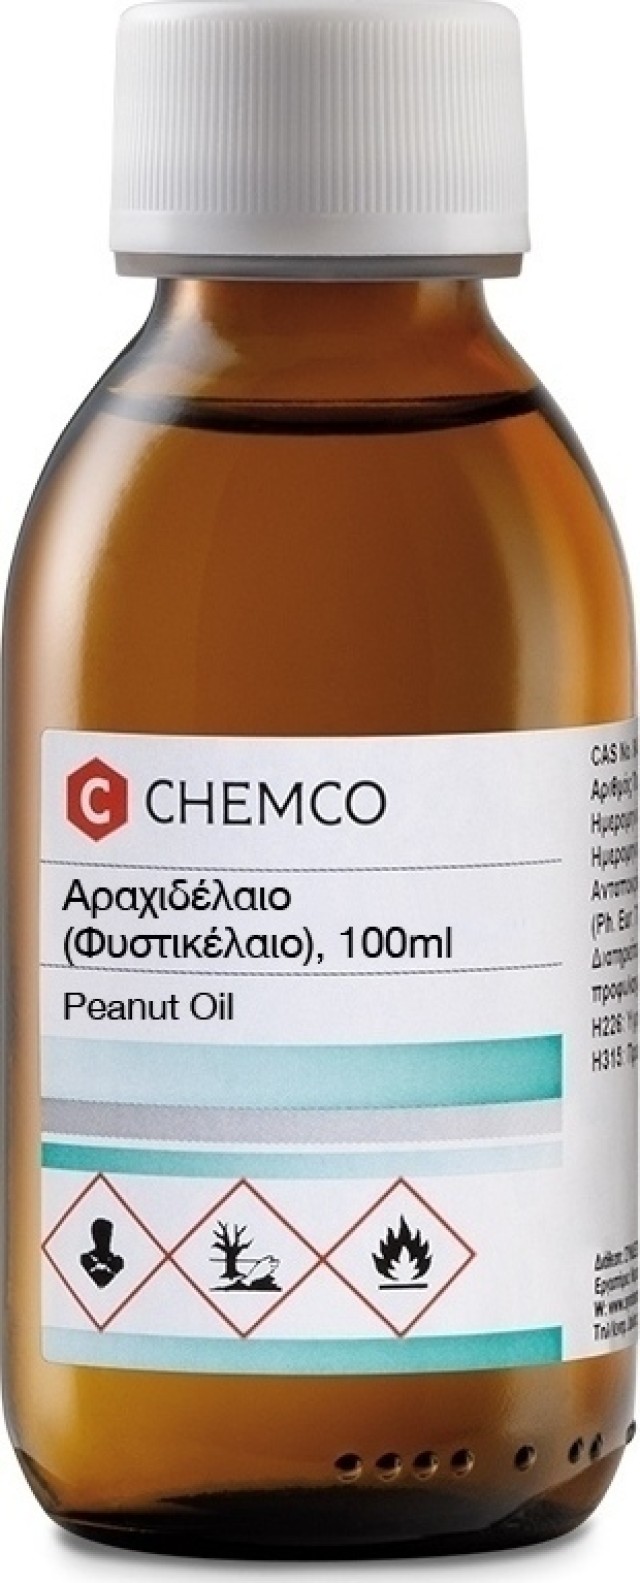 Chemco Έλαιο Αραχιδέλαιο/Φυστικέλαιο 100ml